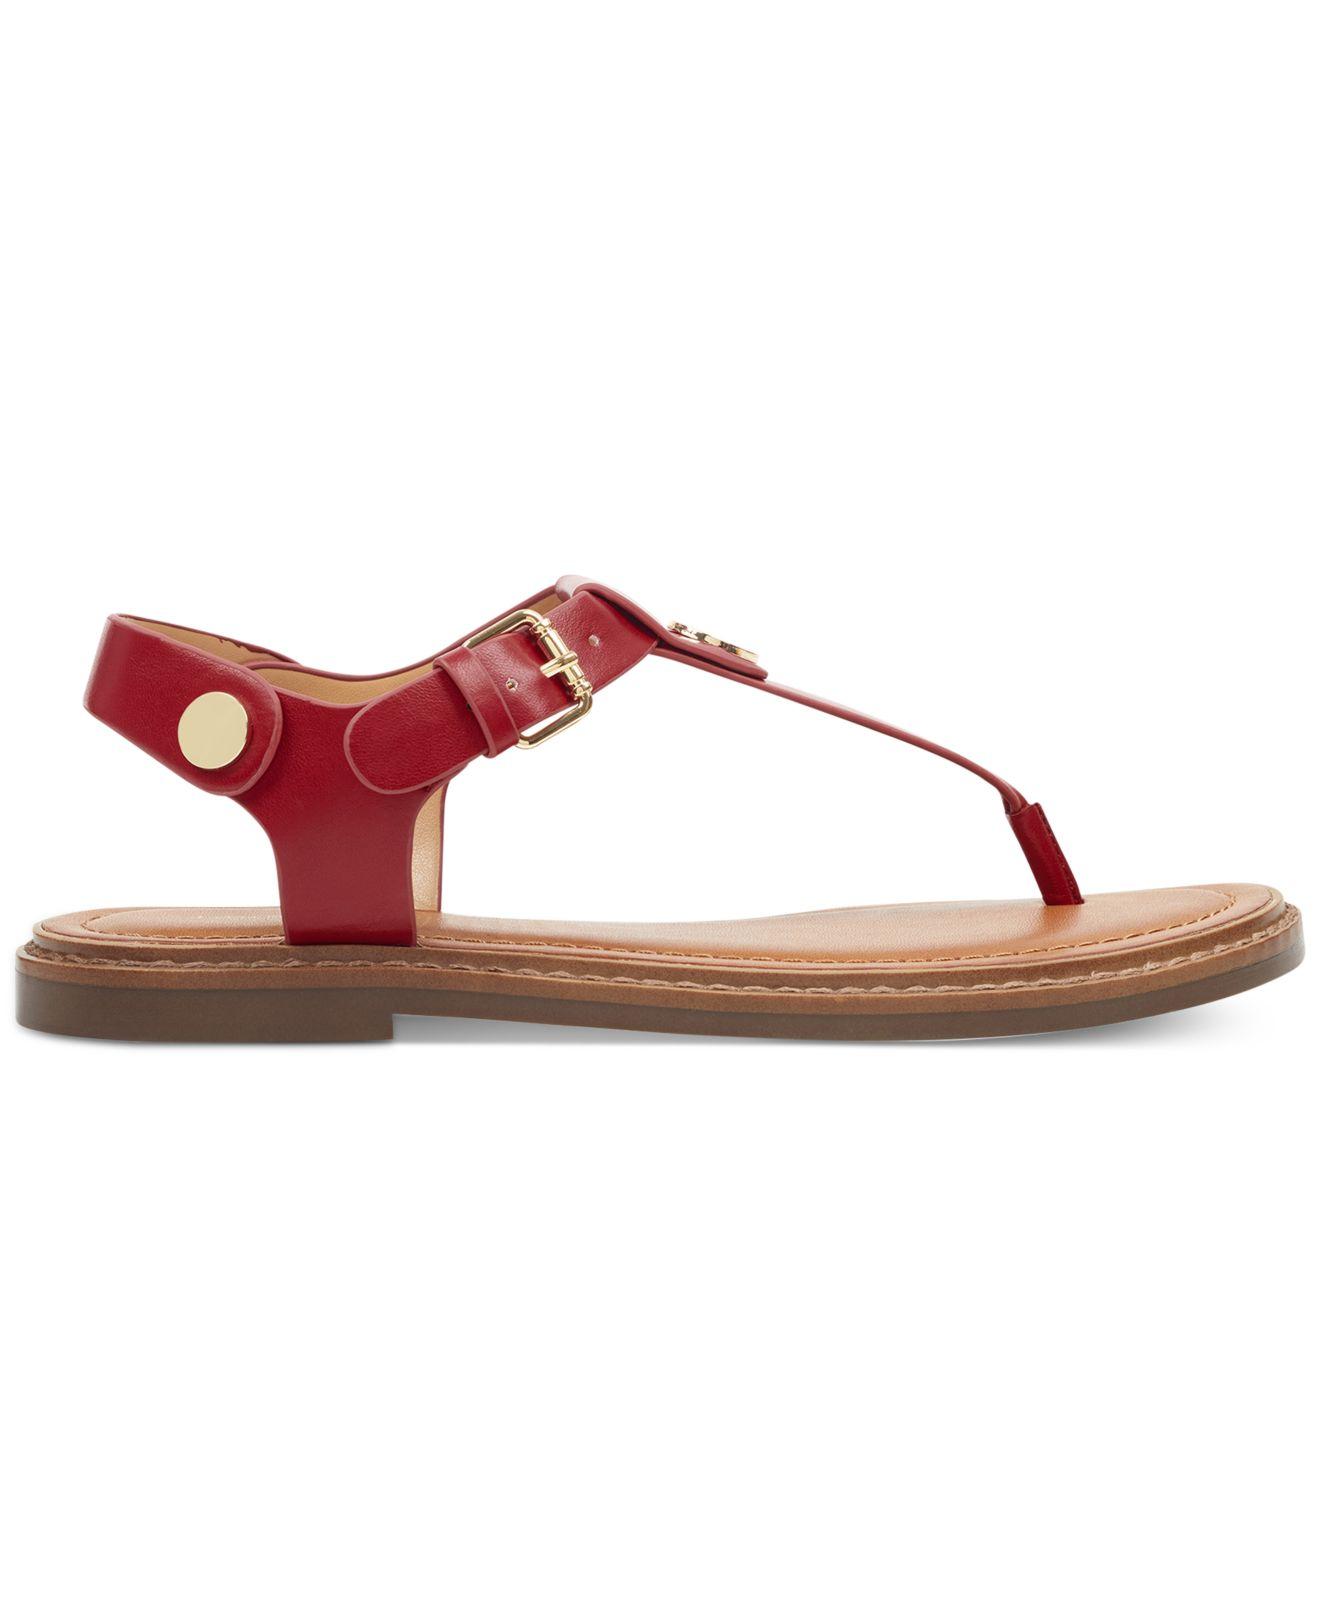 Tommy Hilfiger Bennia T-strap Flat Sandals in Red - Lyst